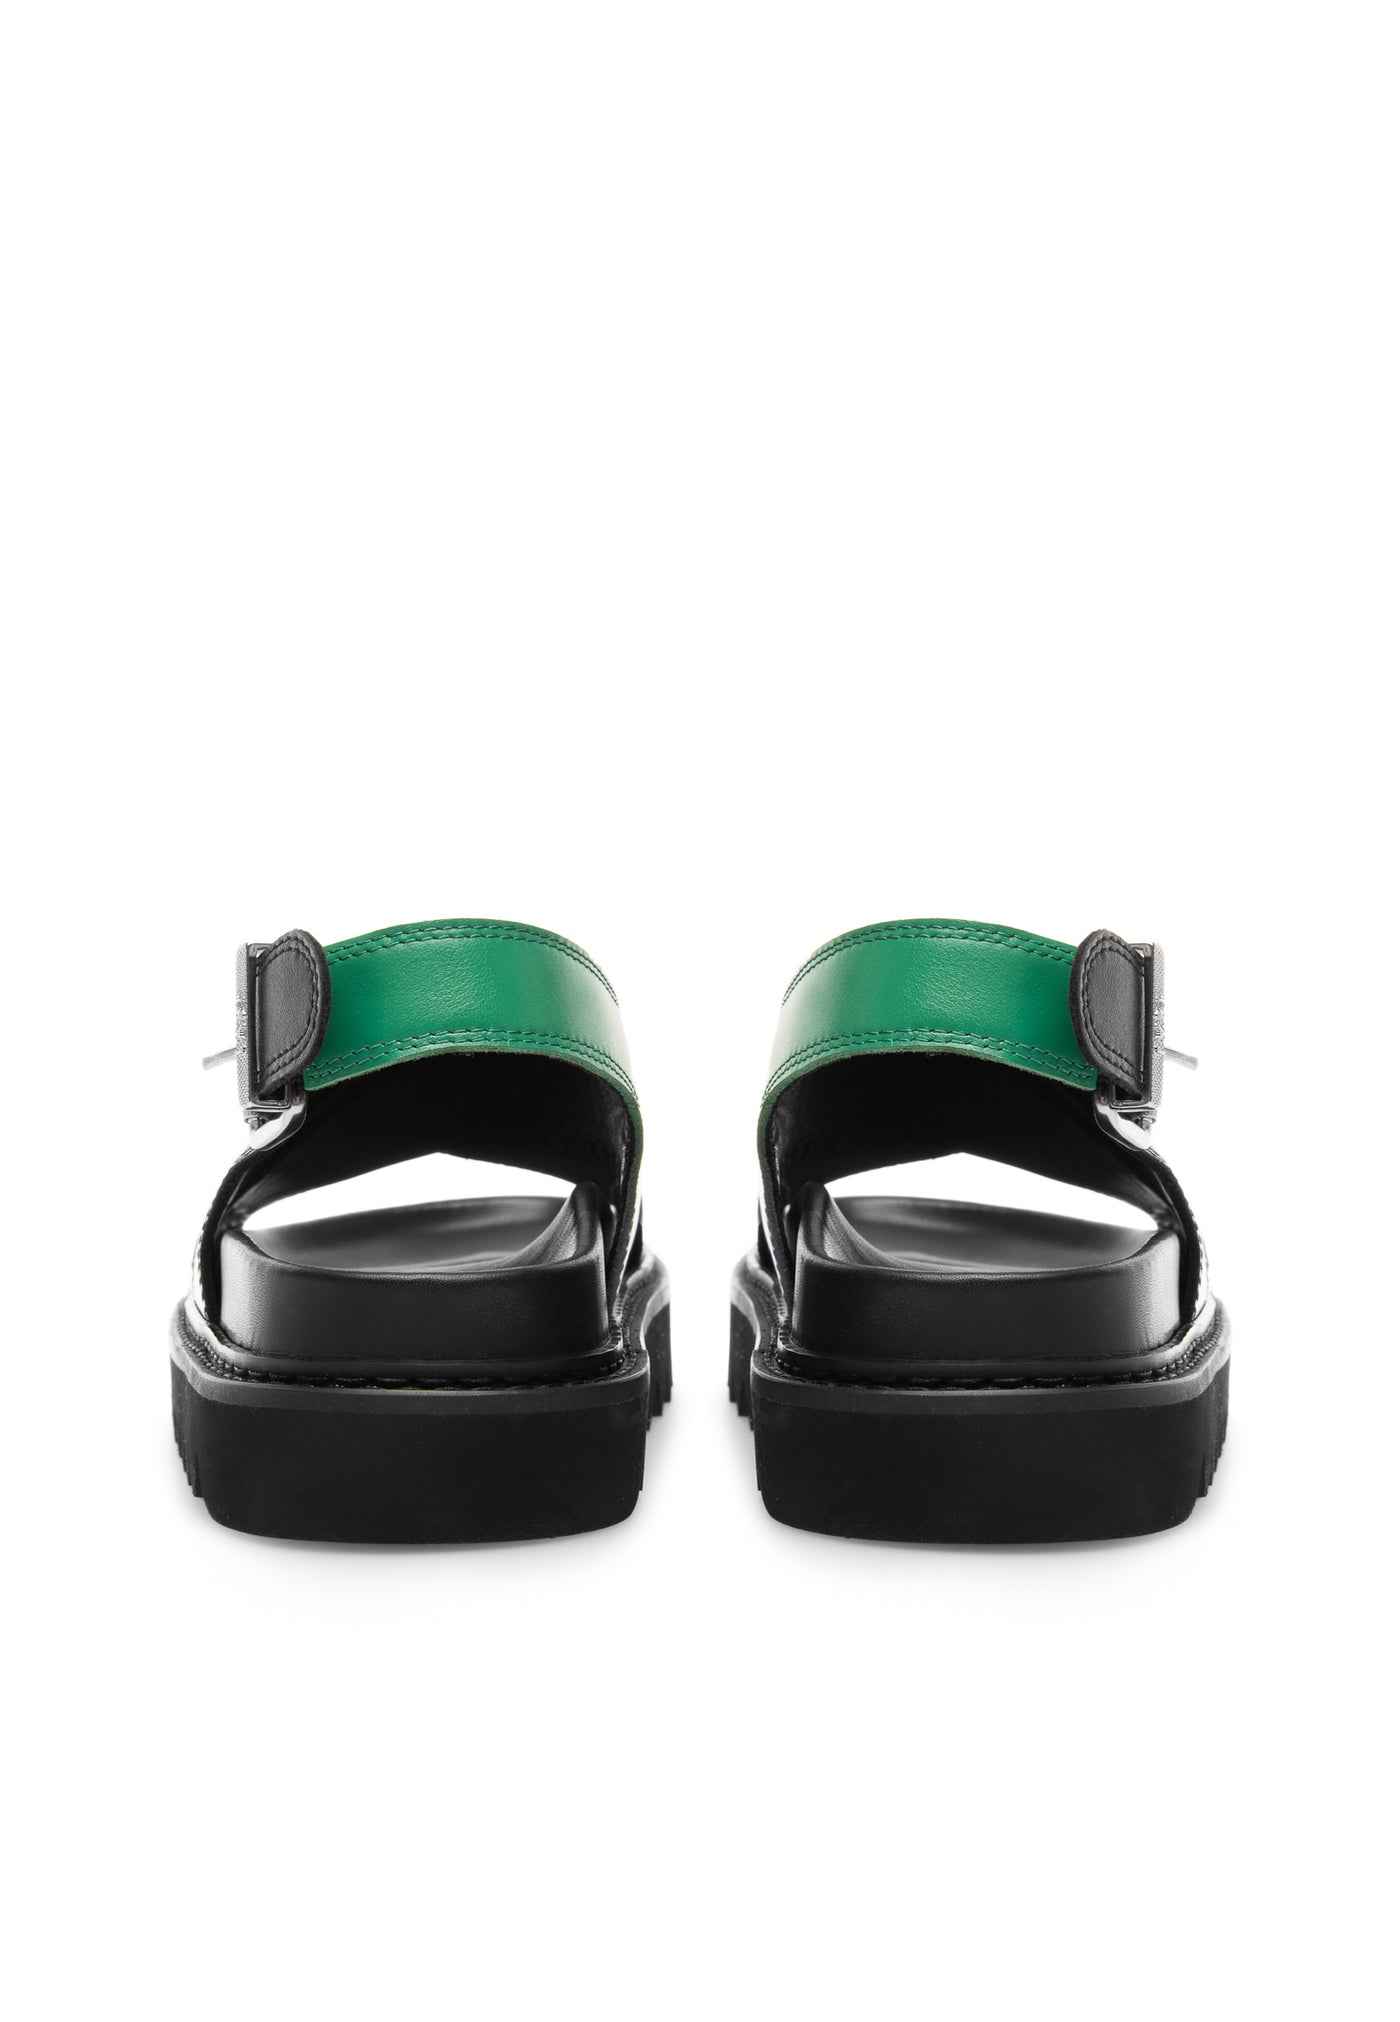 LÄST Diana - Leather - Black/Green Sandals Black/Green